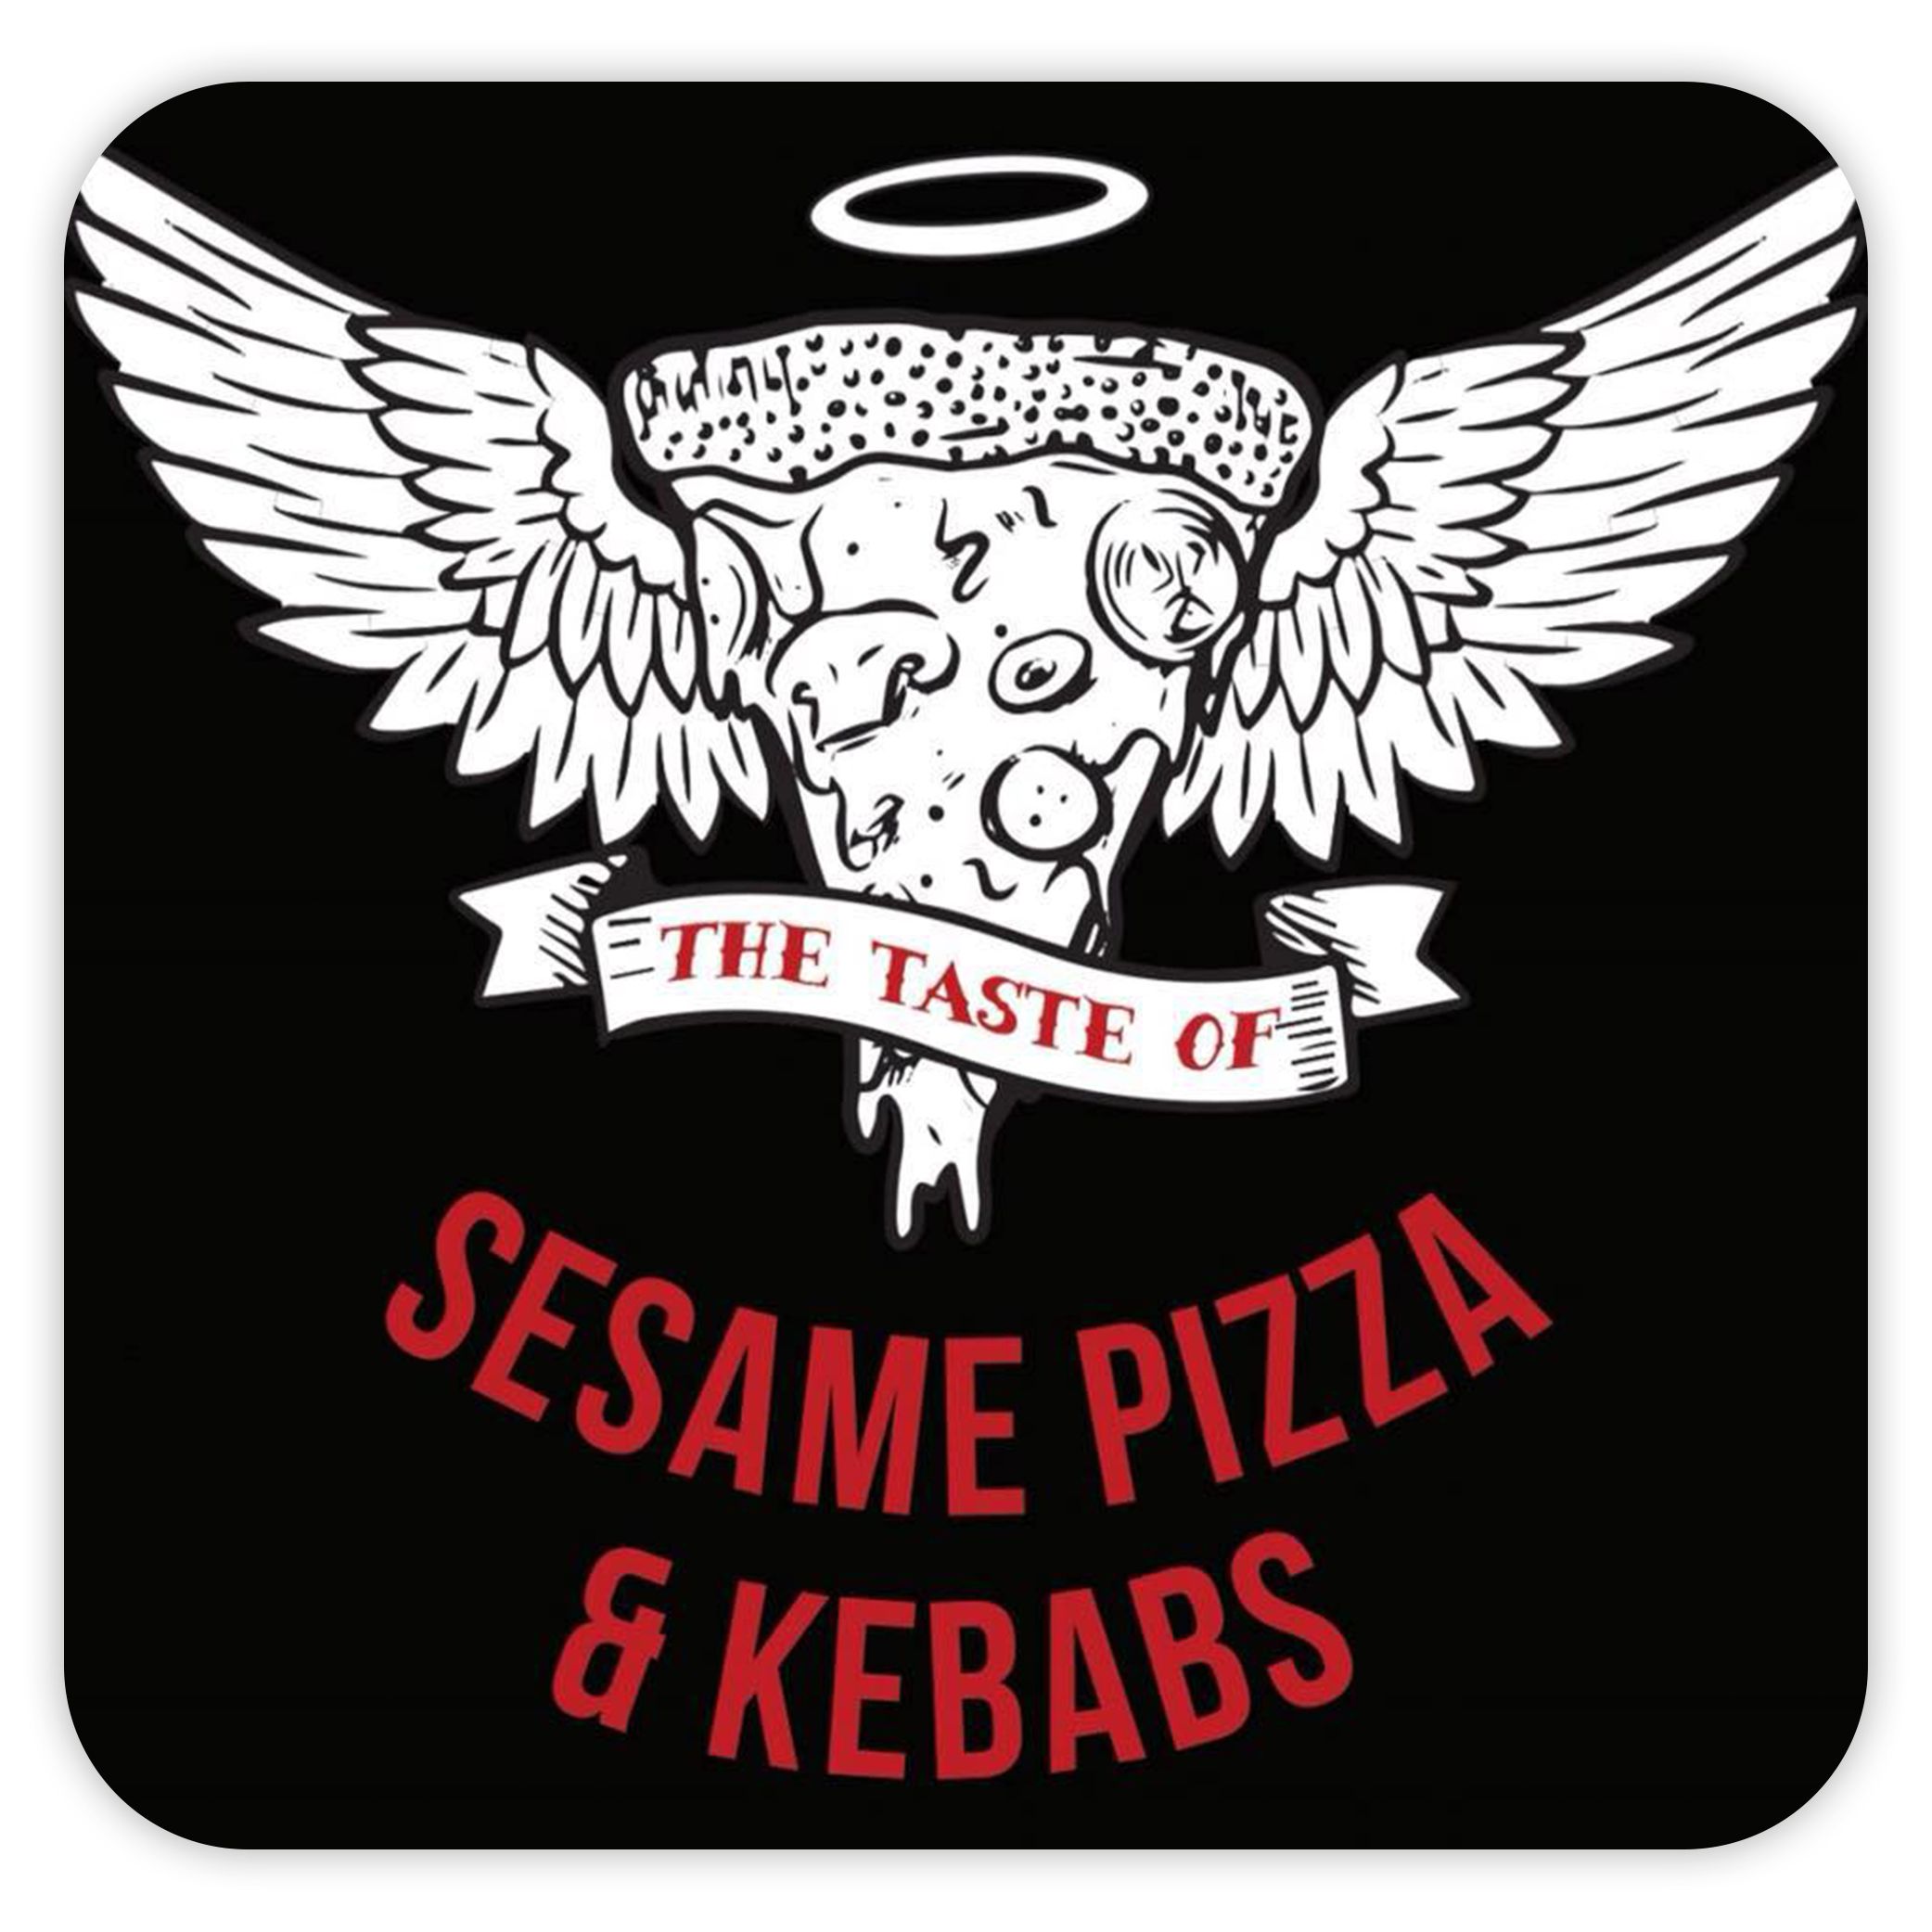 Sesame Rose Pizza